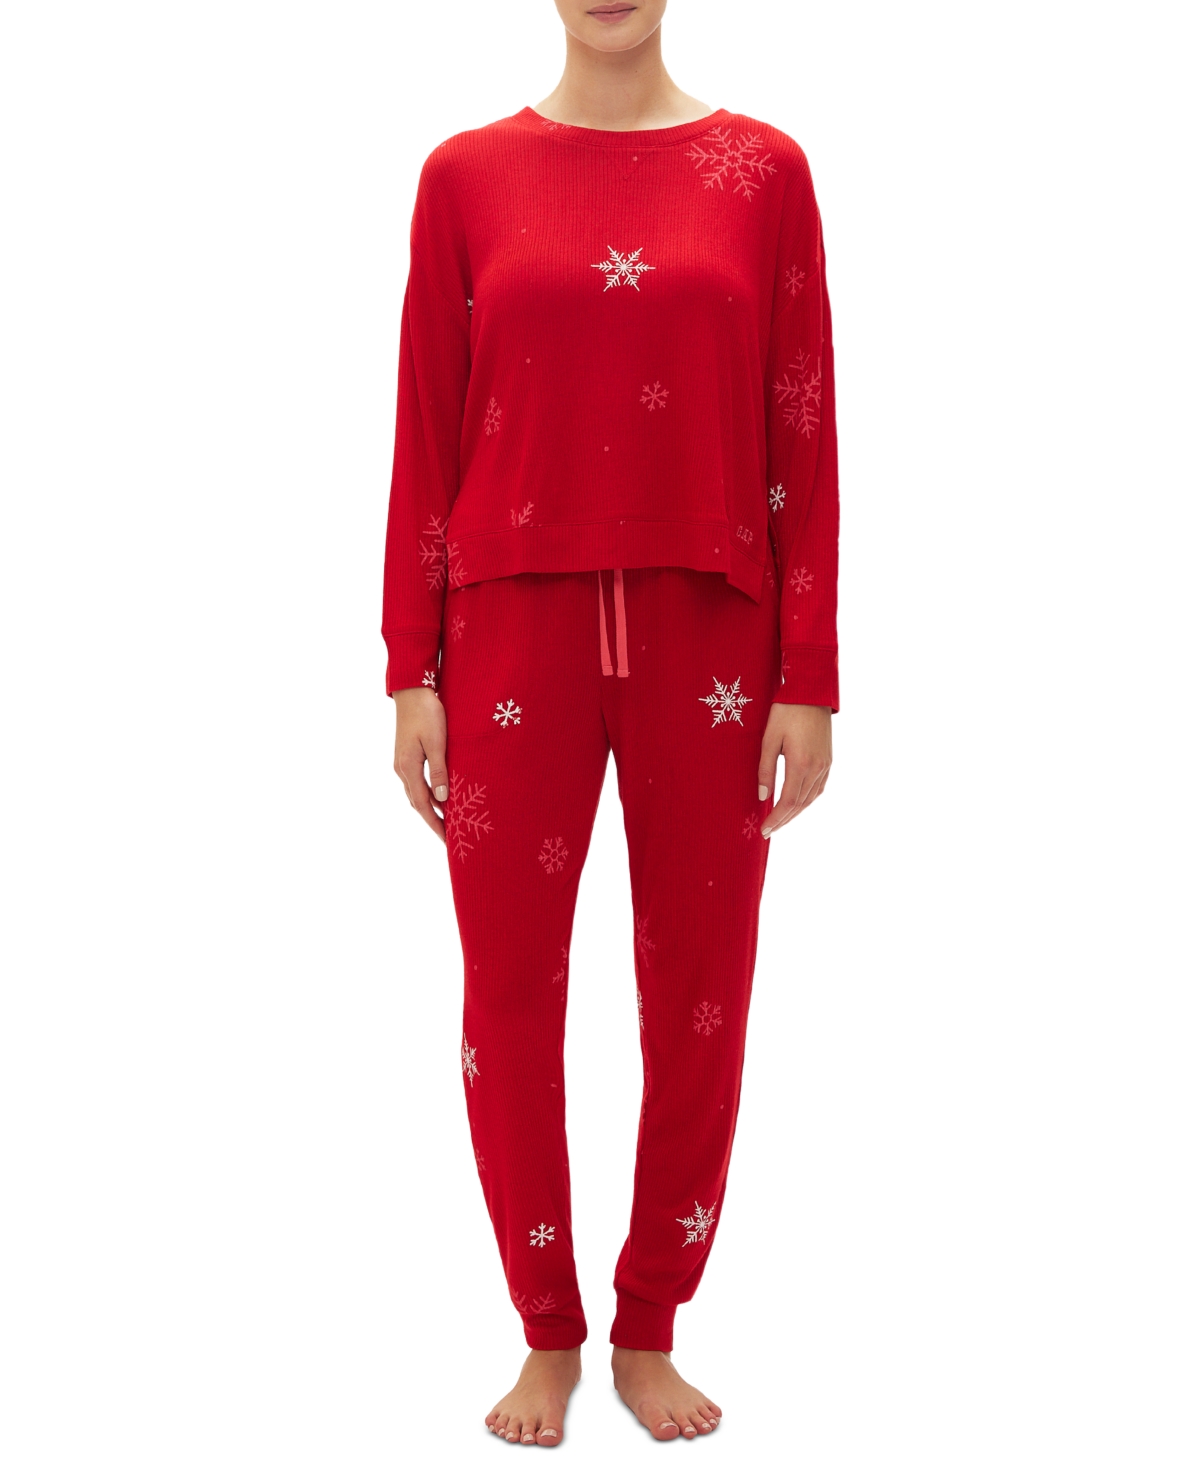 Gap Body Women's 2-pc. Packaged Long-sleeve Jogger Pajamas Set In Modern Red Snowflake